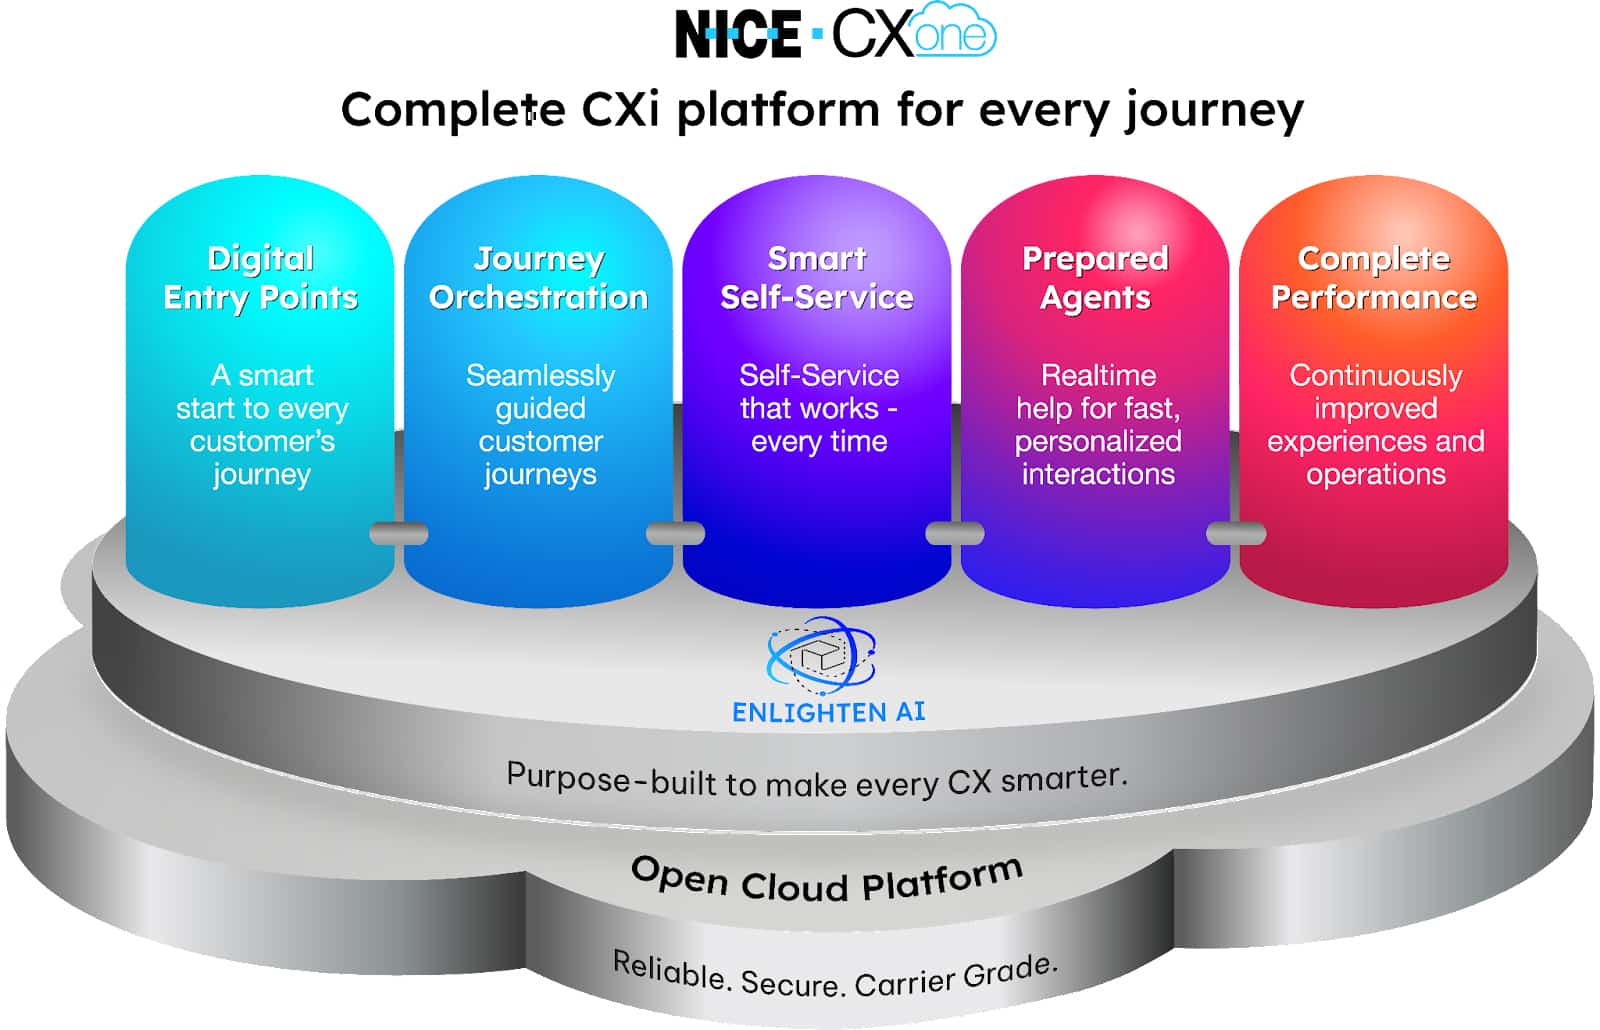 Enlighten AI of NICE CXone for complete CXi platform.